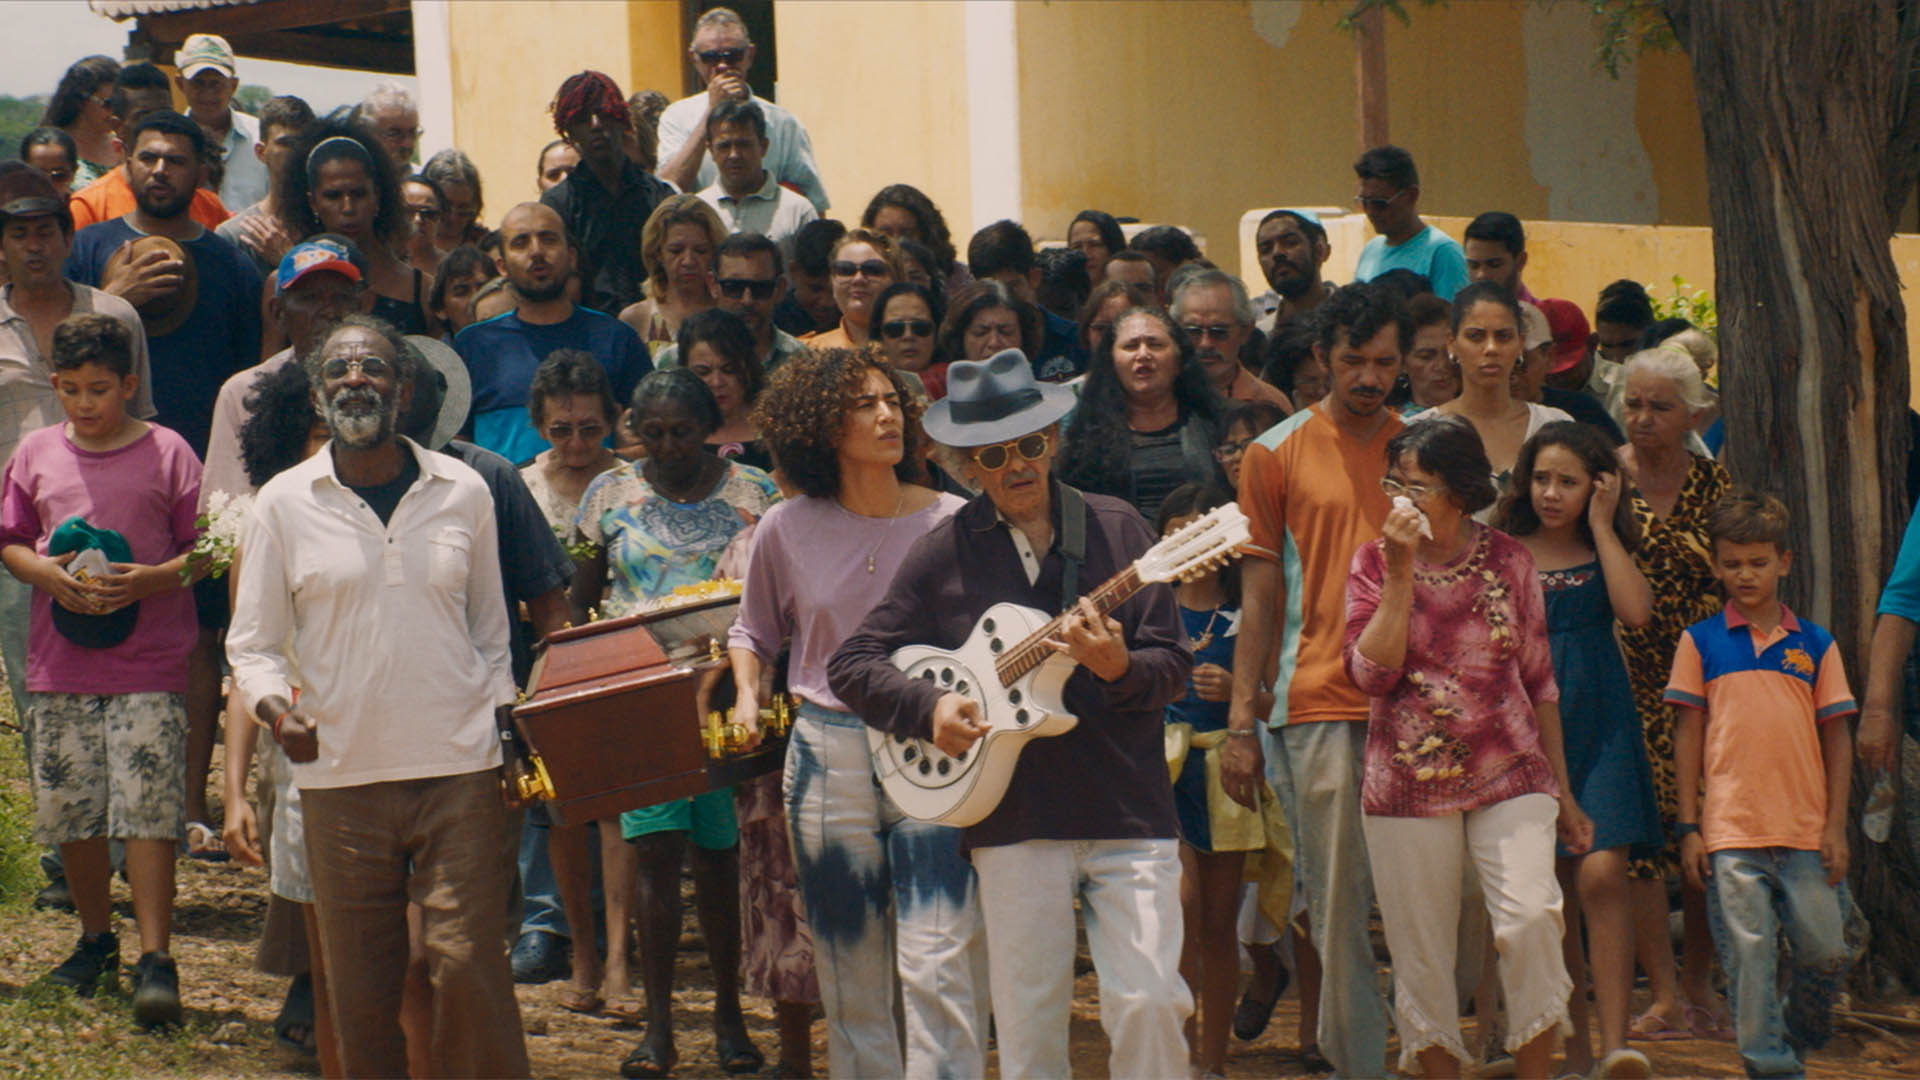 Trailer still frame from Bacurau, people walking behind man playing guitar